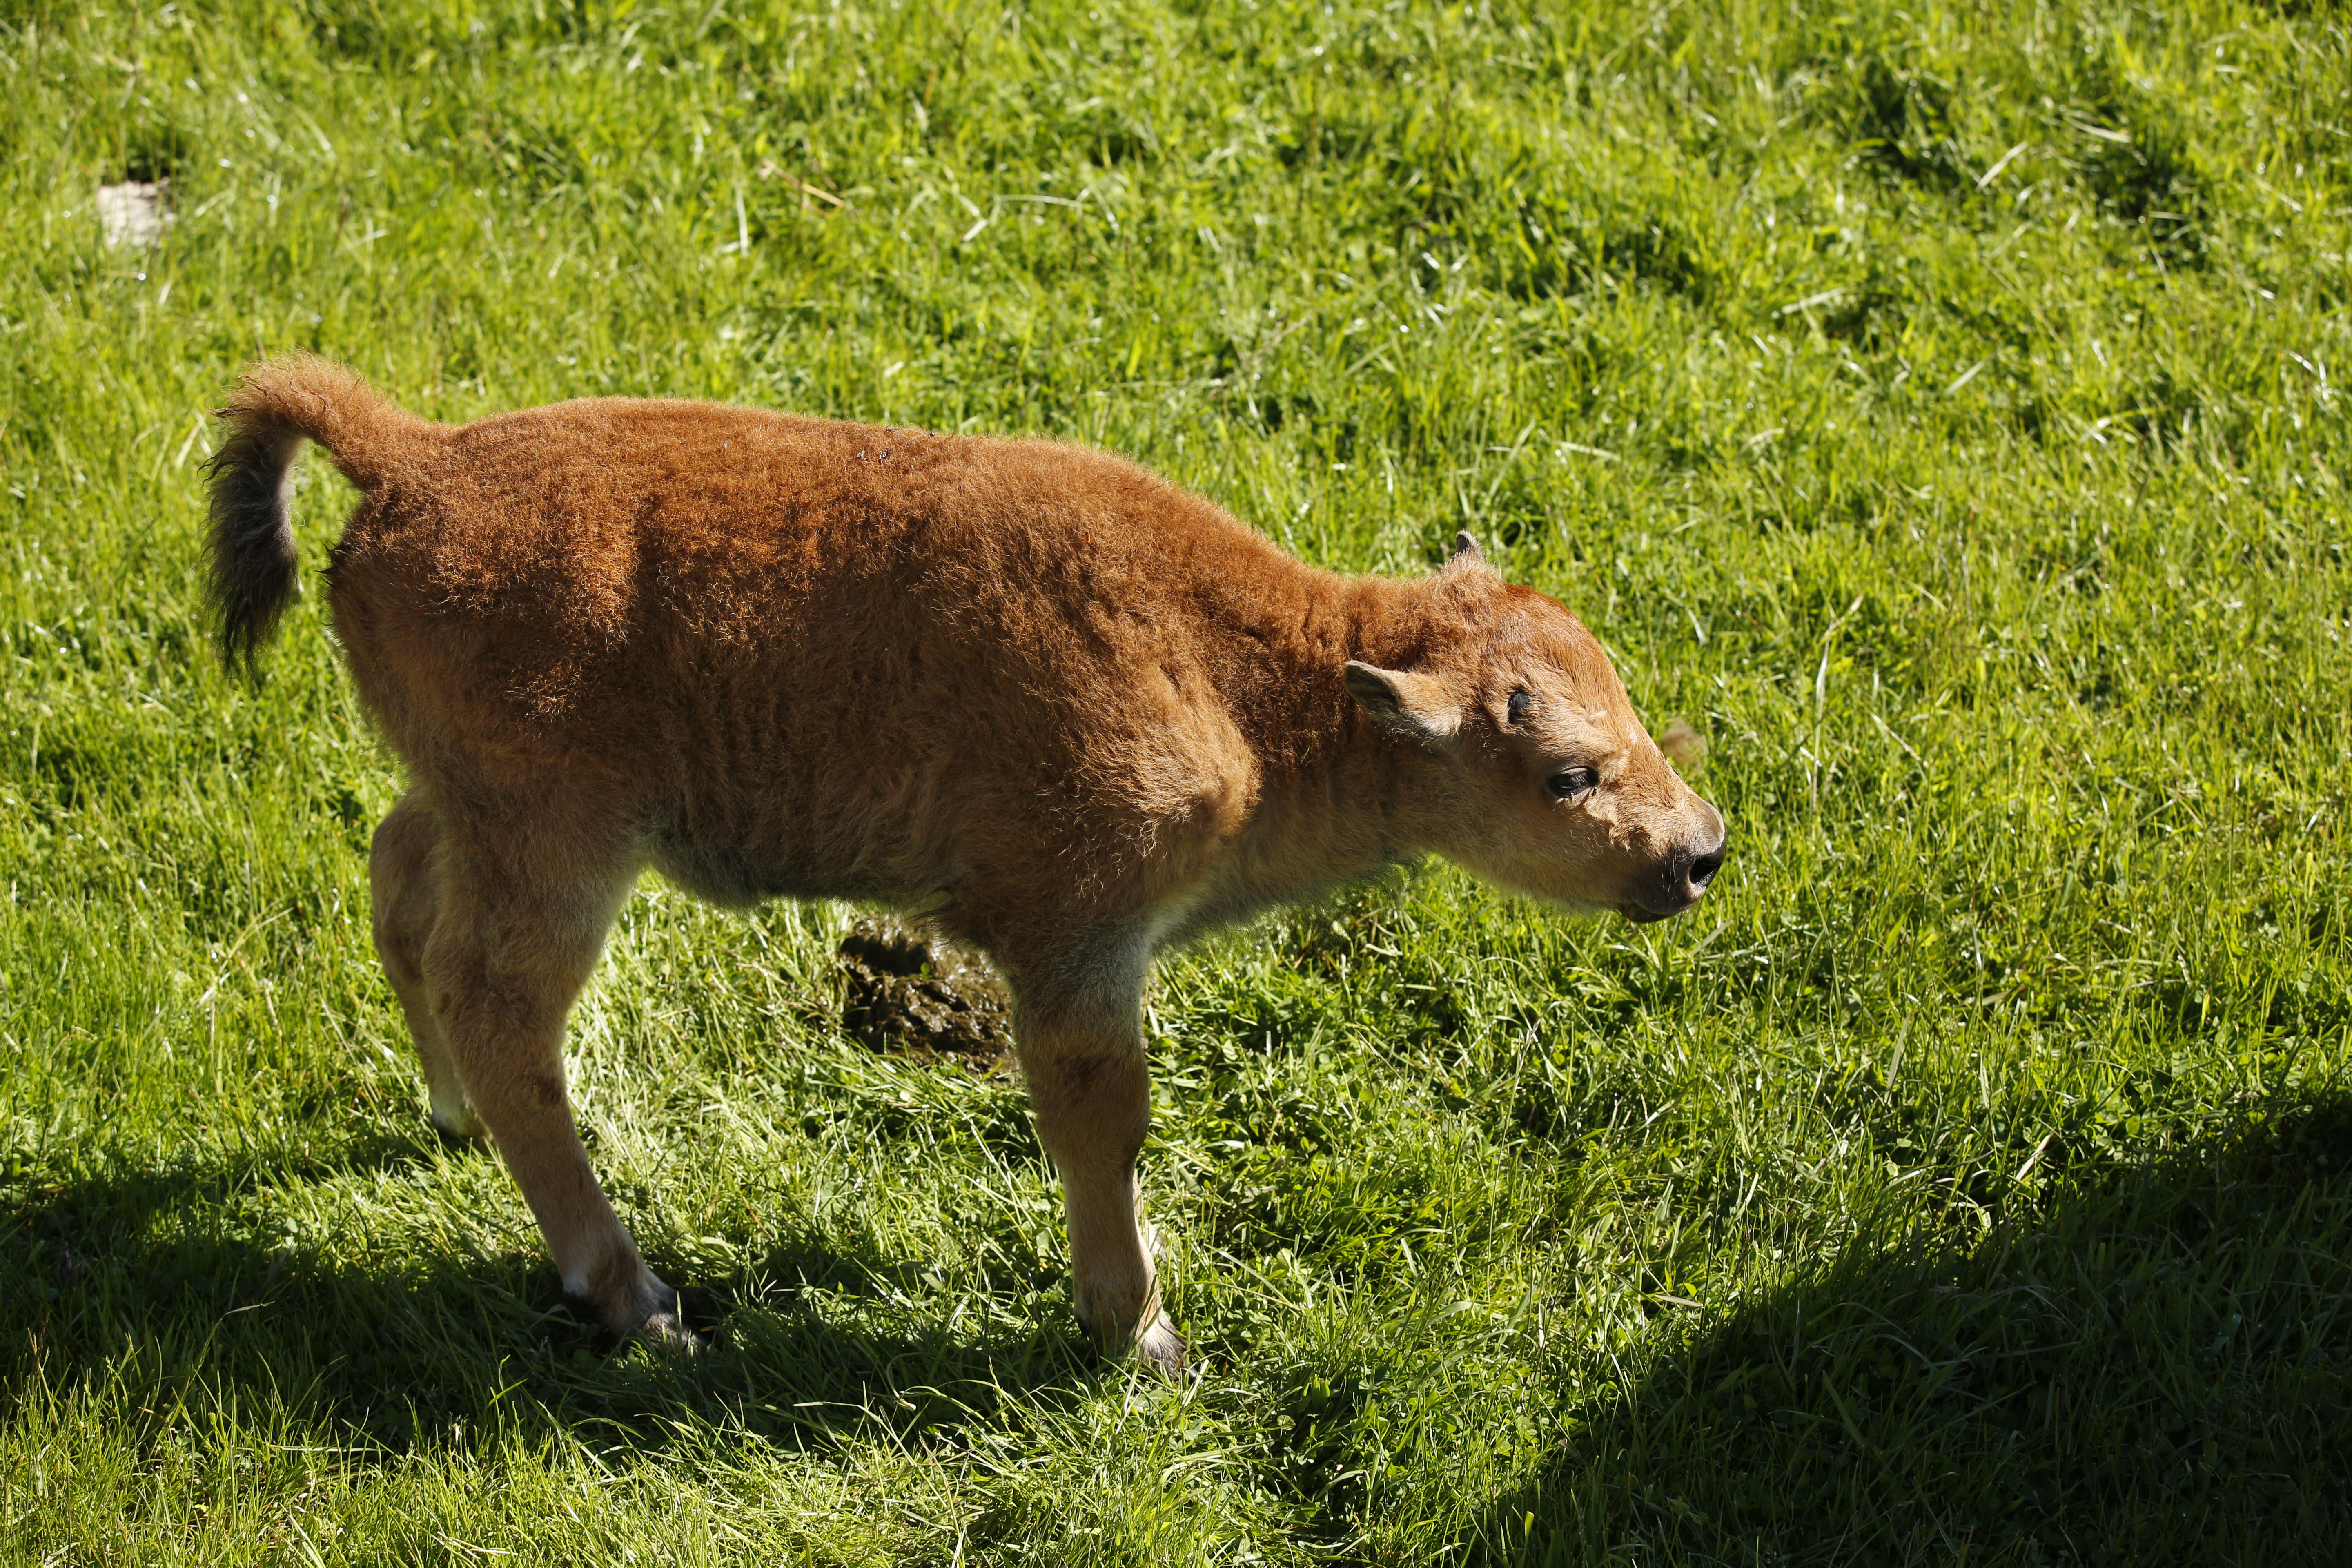 A bison calf at Northwest Trek Wildlife Park in May 2017